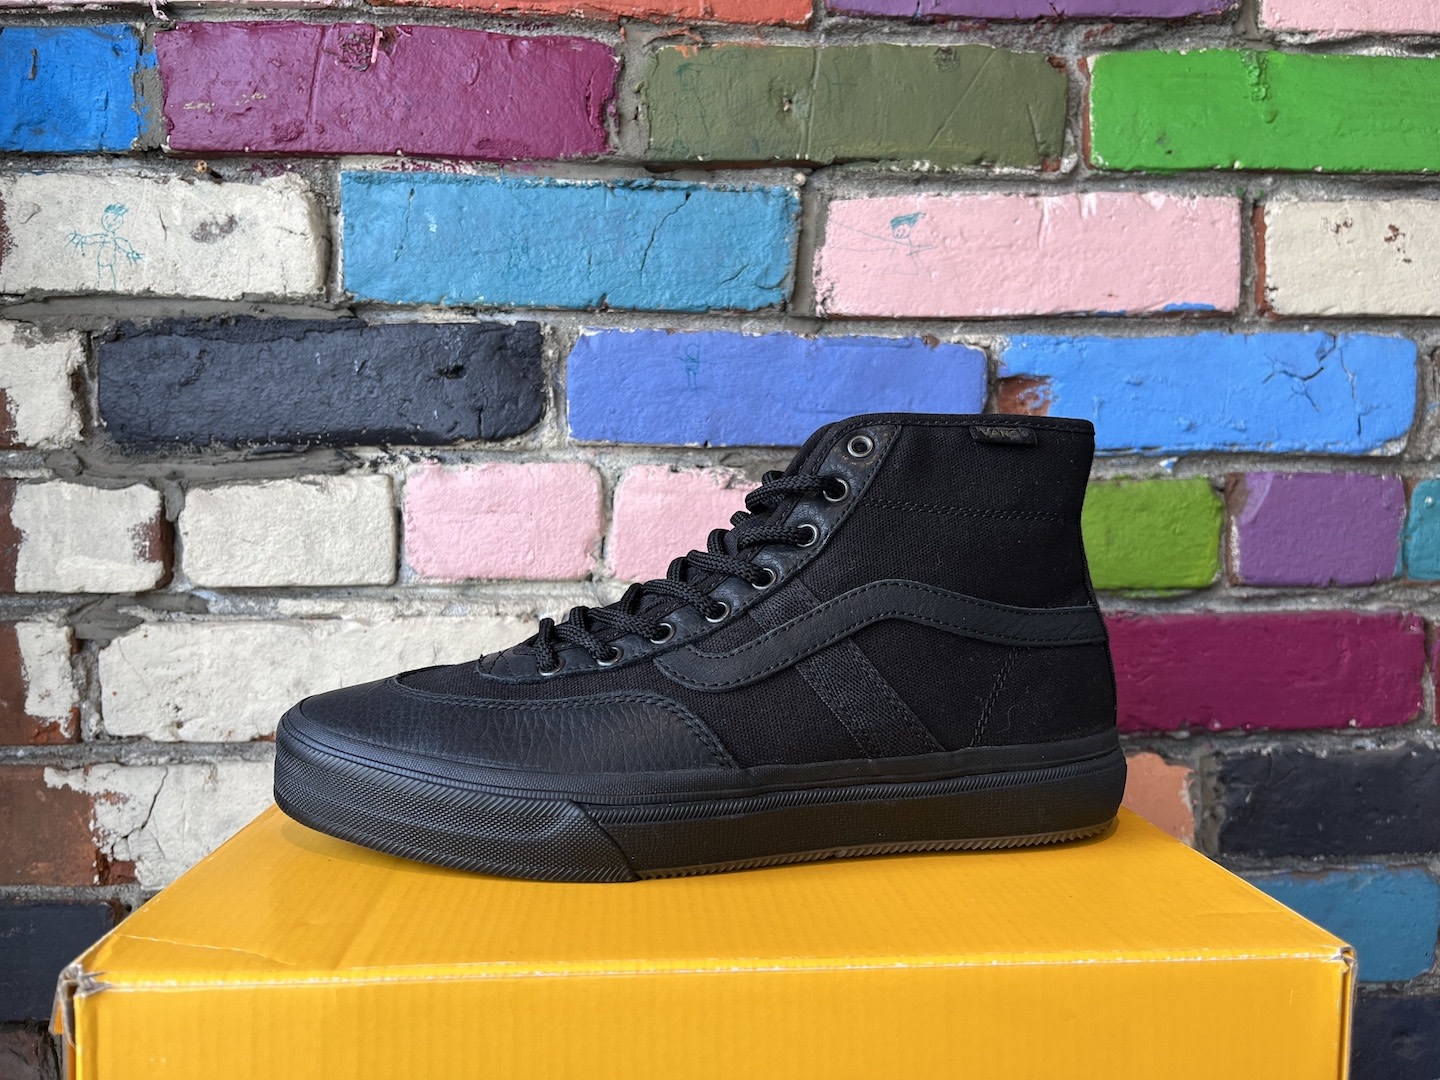 Vans Vans Crockett High Shoe - Butter Leather Black/Black - Antisocial